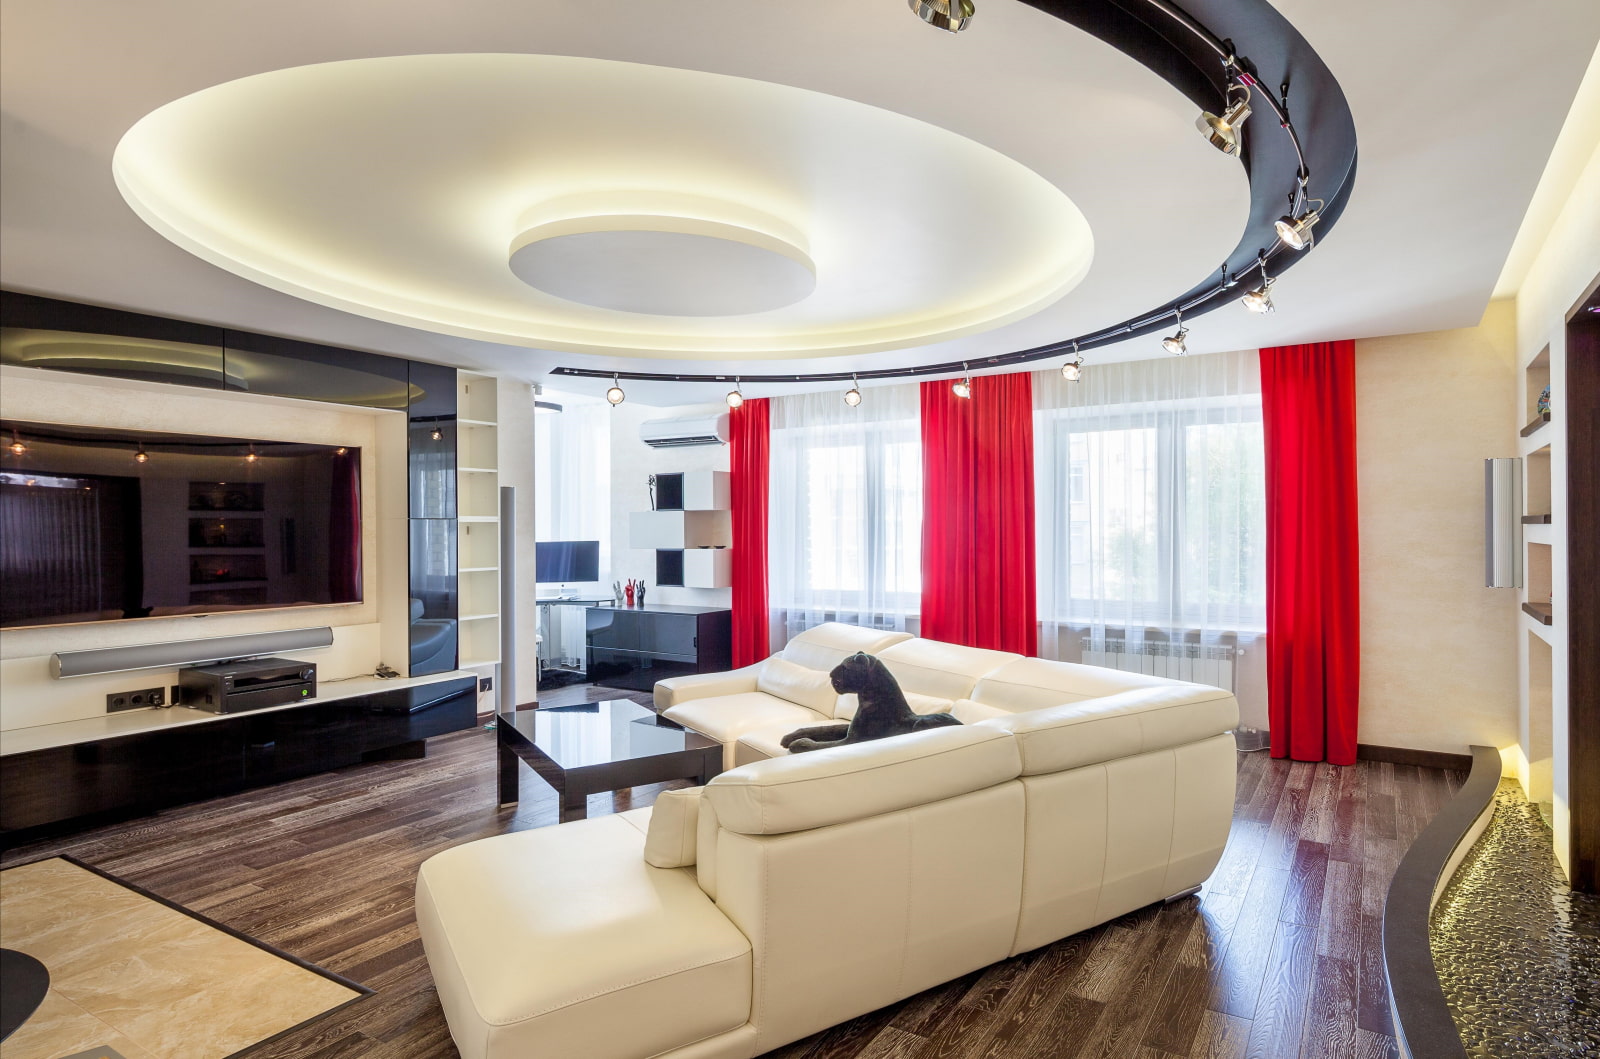 drywall ceiling for living room decor ideas